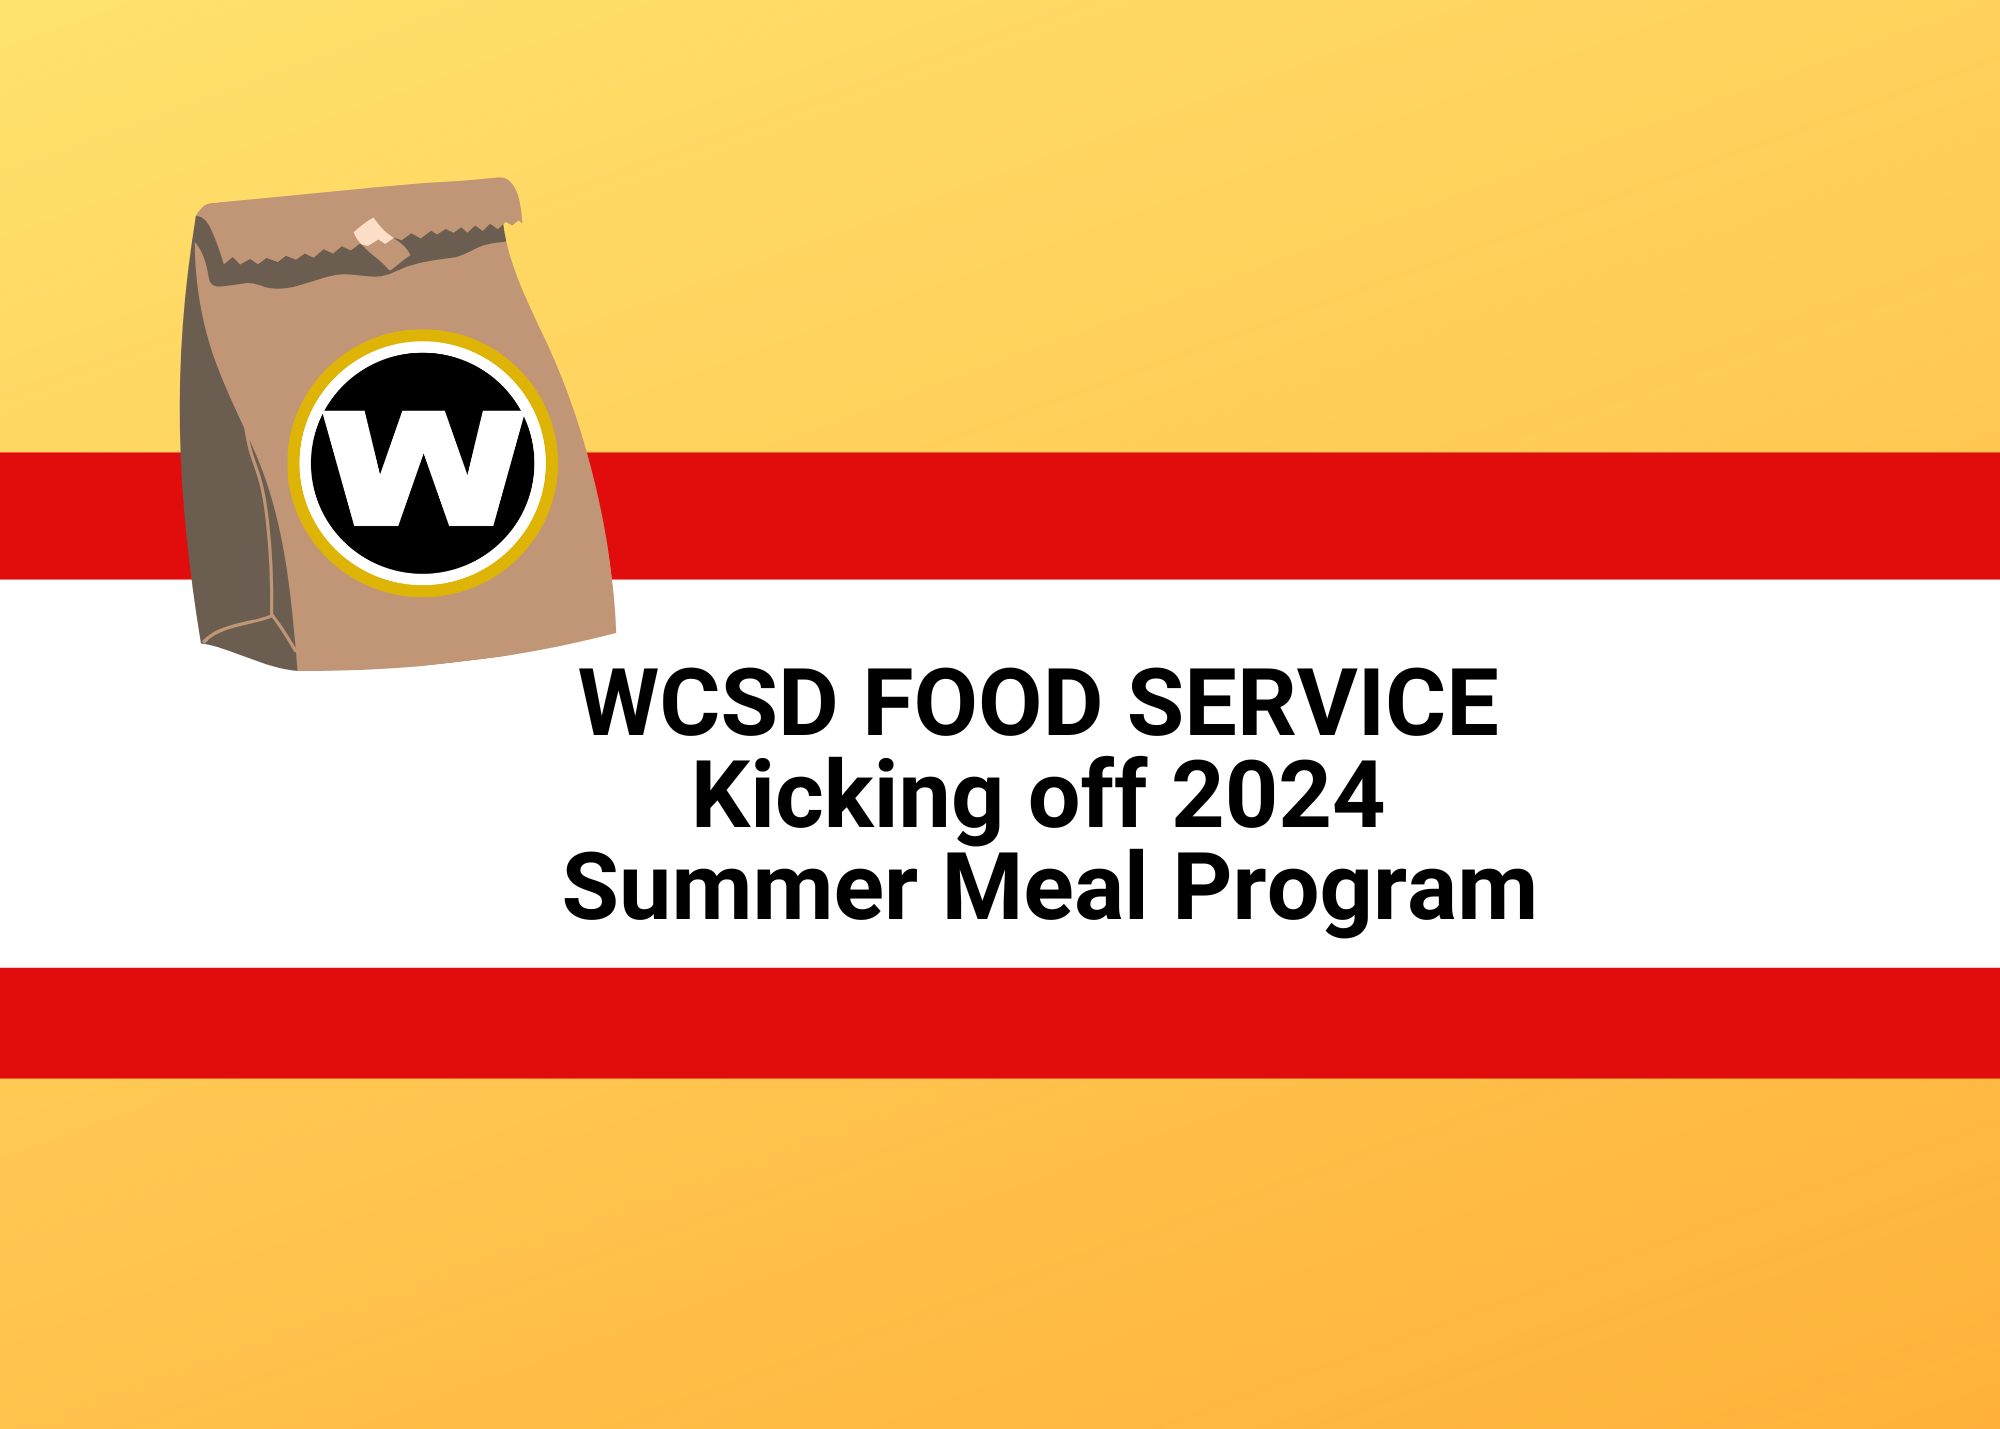 WCSD’s 2024 Summer Set to Start on Monday, June 3